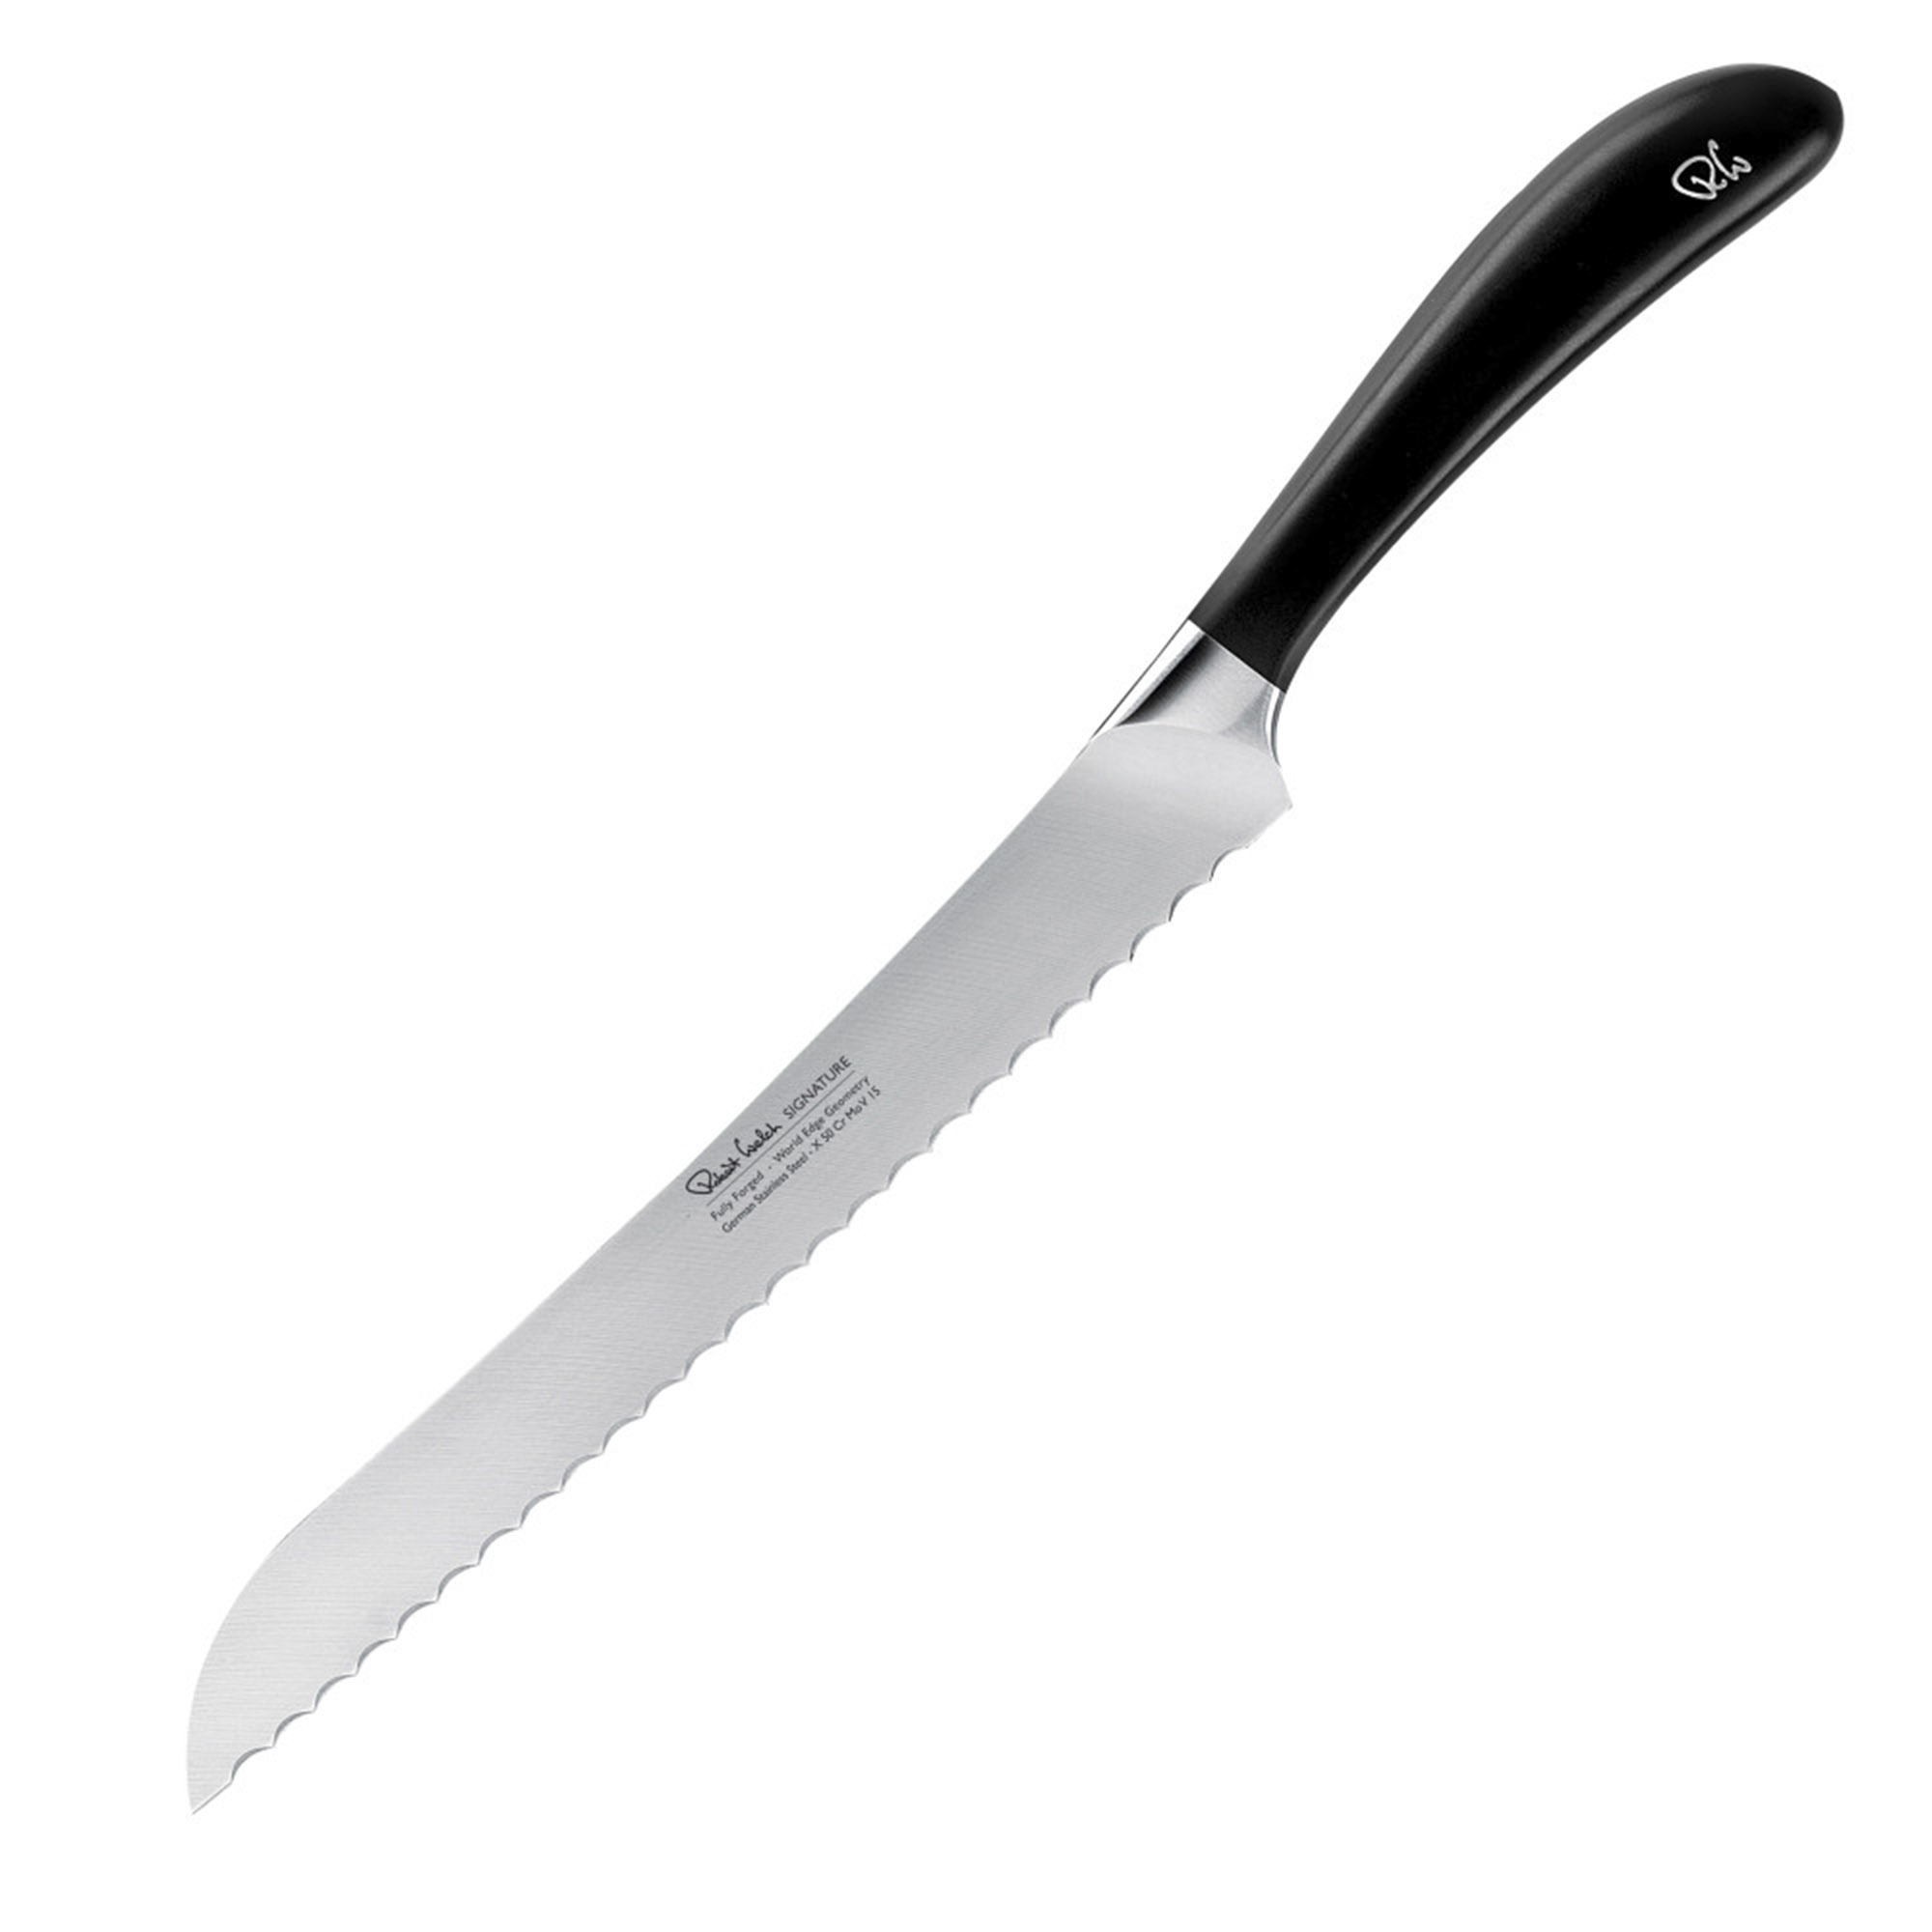 Нож для хлеба Robert Welch Signature 22 см нож для хлеба gourmet 4143 200 мм